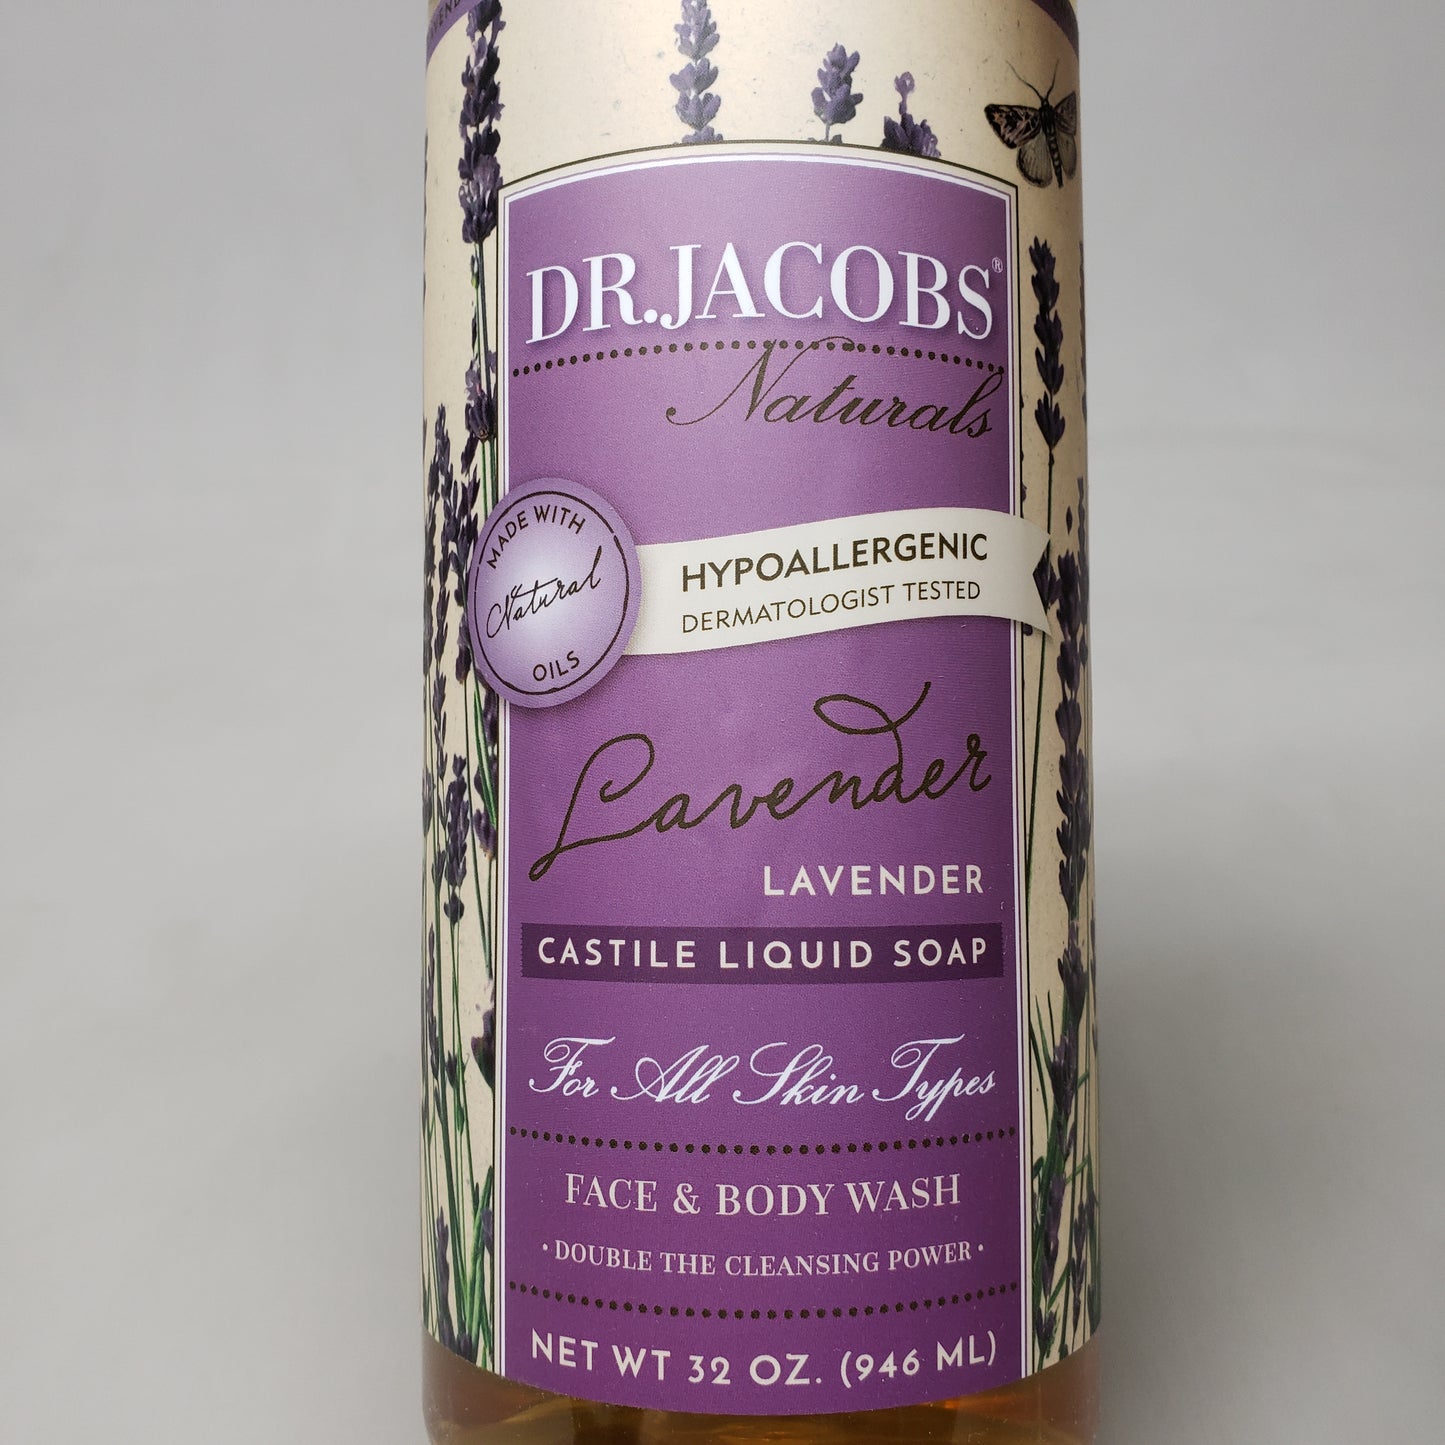 DR. JACOBS NATURALS Lavender Castile Liquid Soap 32 oz Hypoallergenic (New)